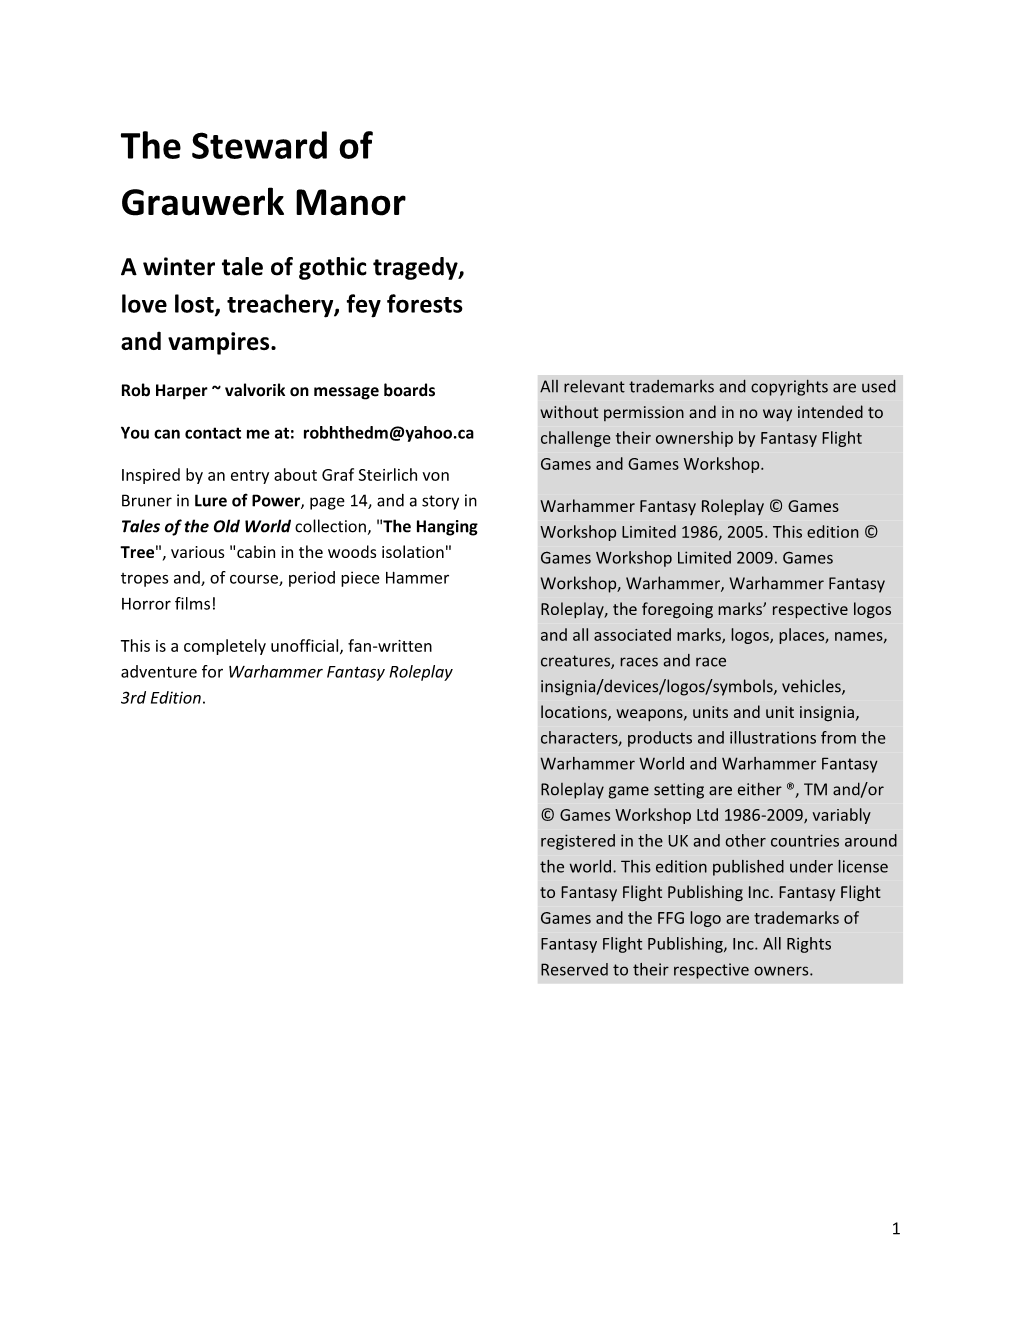 The Steward of Grauwerk Manor